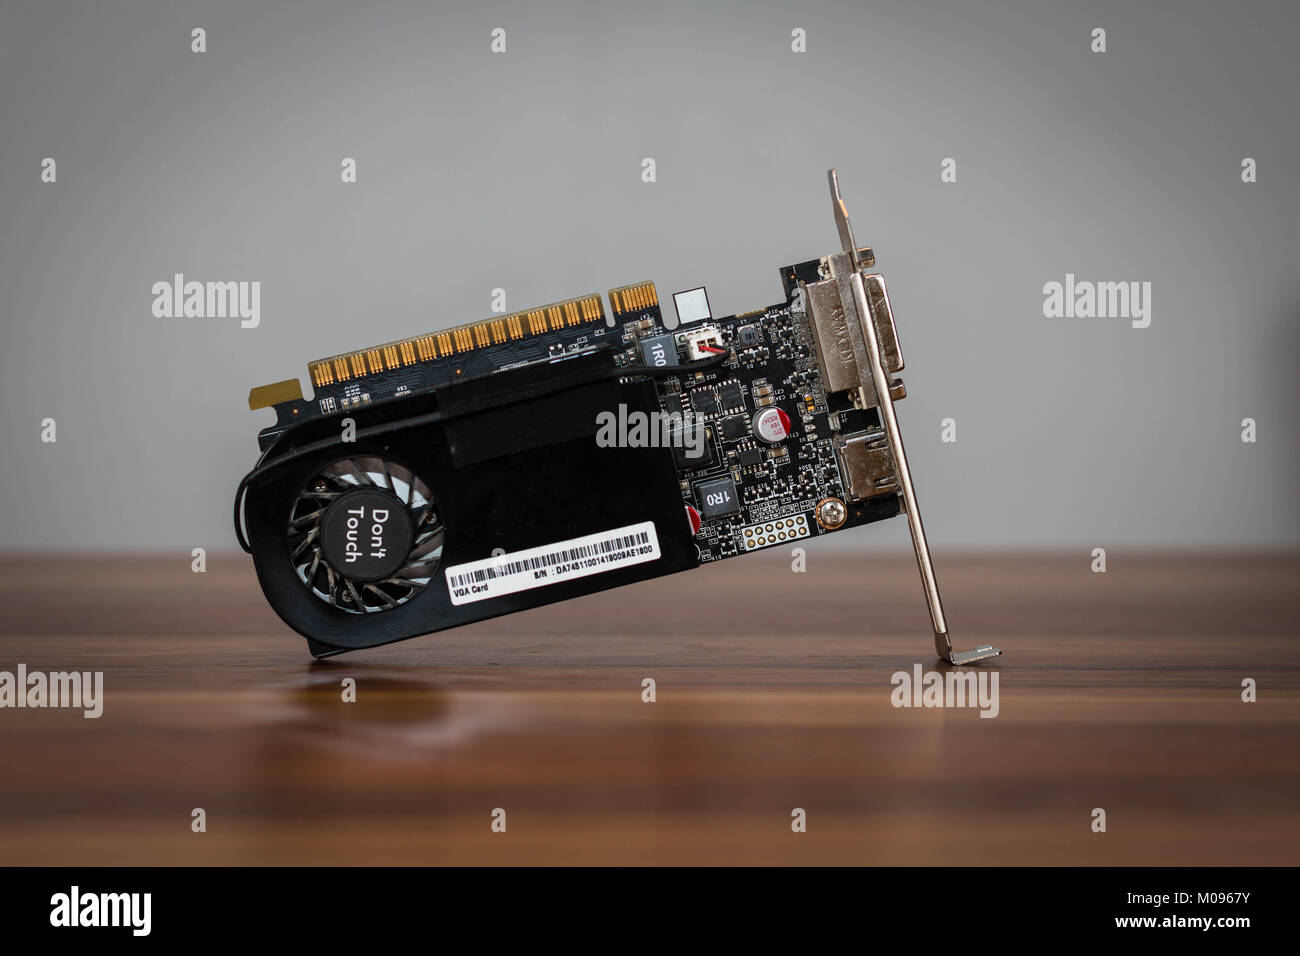 Nvidea Geforce GTX 745 Graphics Card (GPU Stock Photo - Alamy